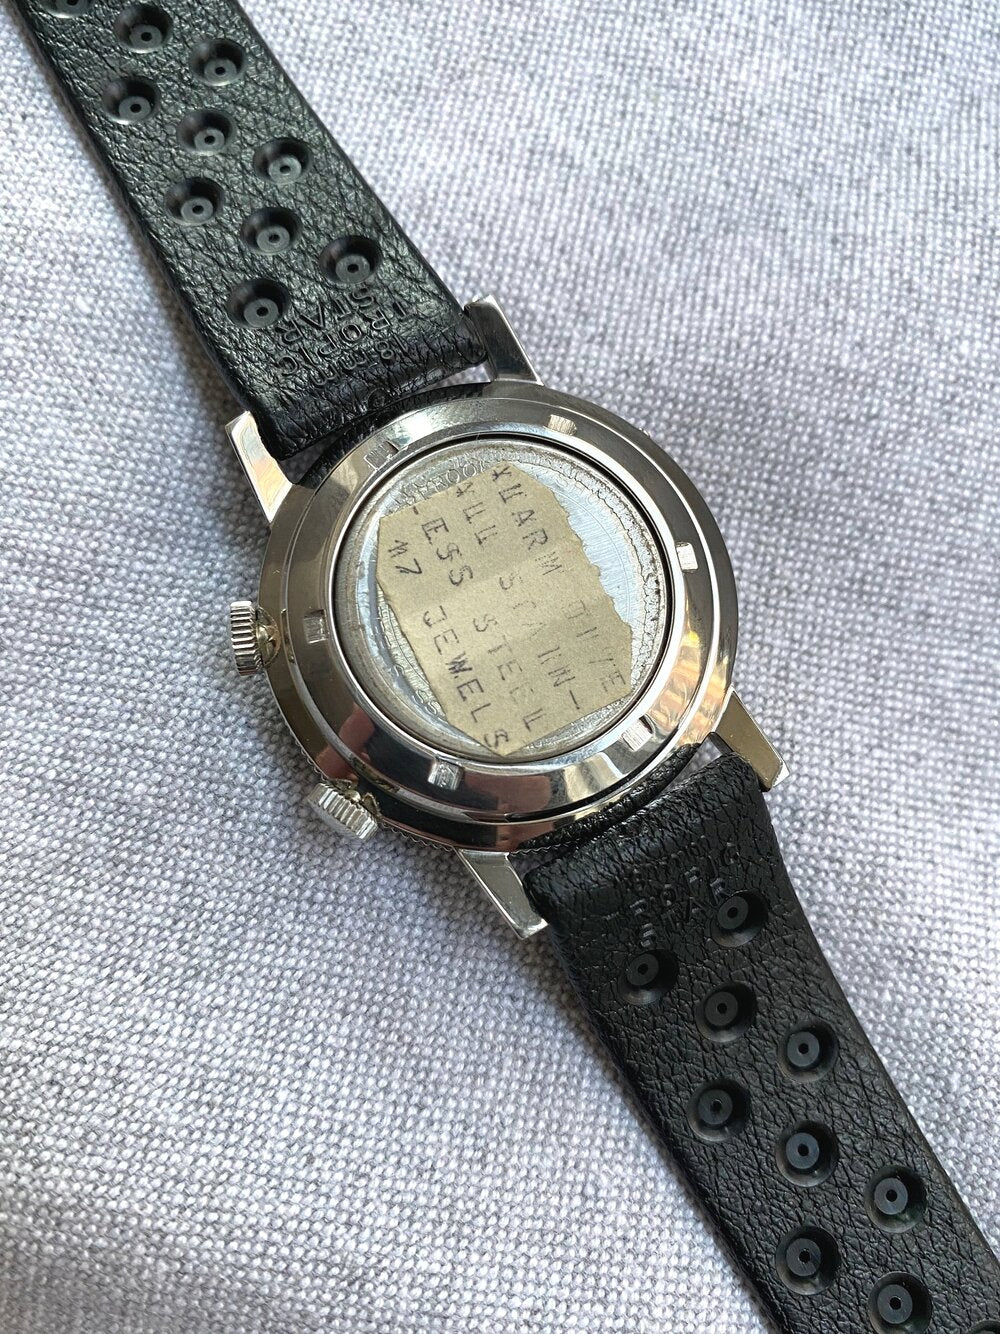 1960s Croton Wrist Alarm ref. 9877 'Orange'